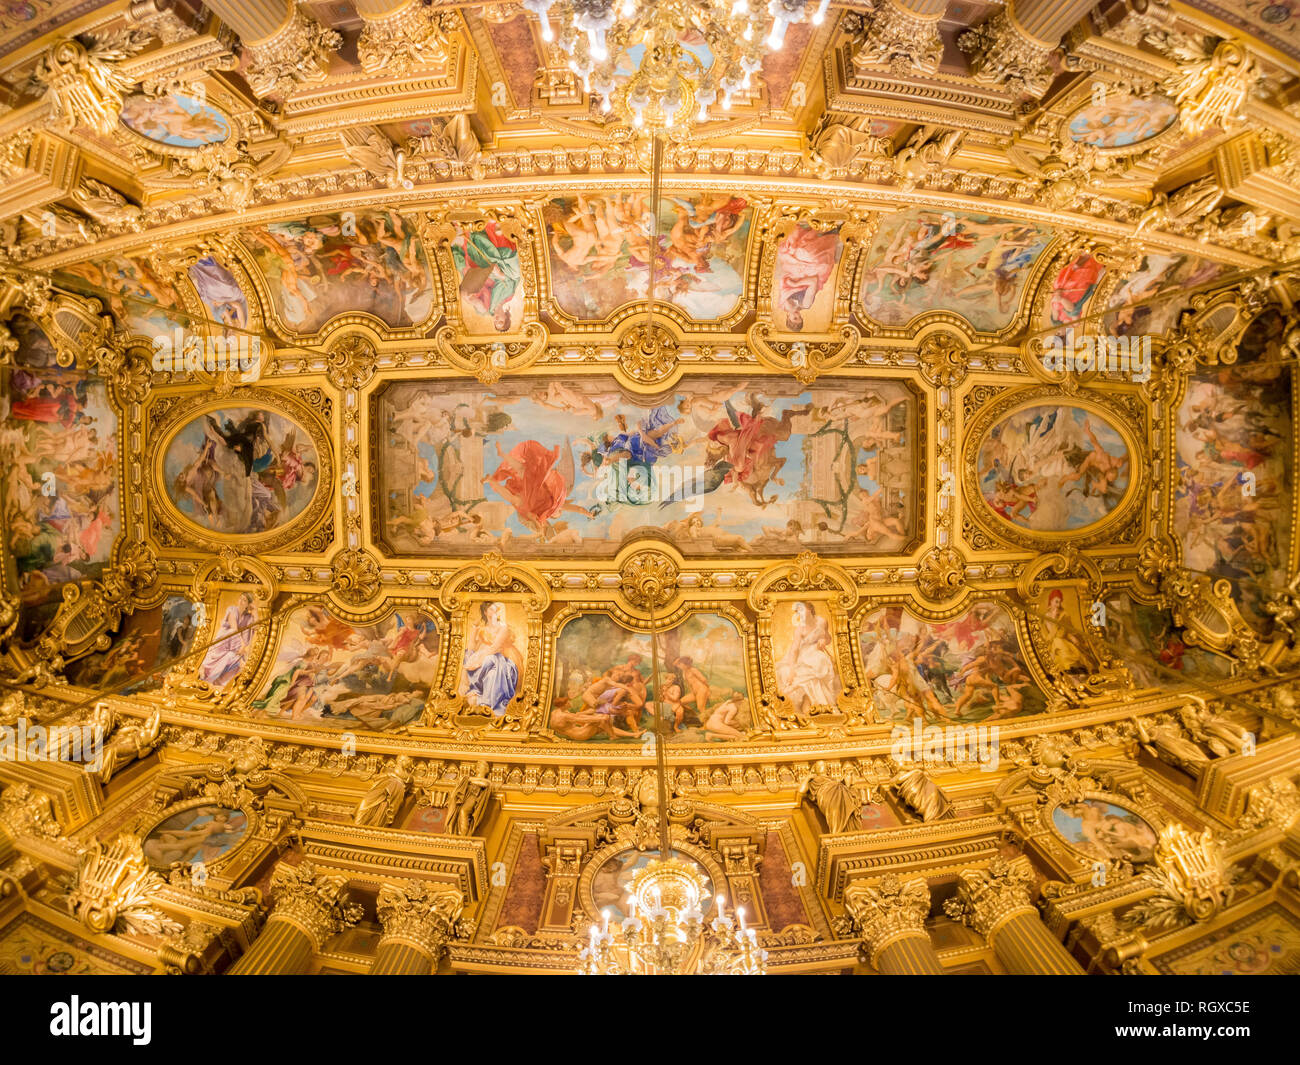 France, MAY 7: Interior view of the famous Grand Foyer of Palais Garnier on MAY 7, 2018 at France Stock Photo